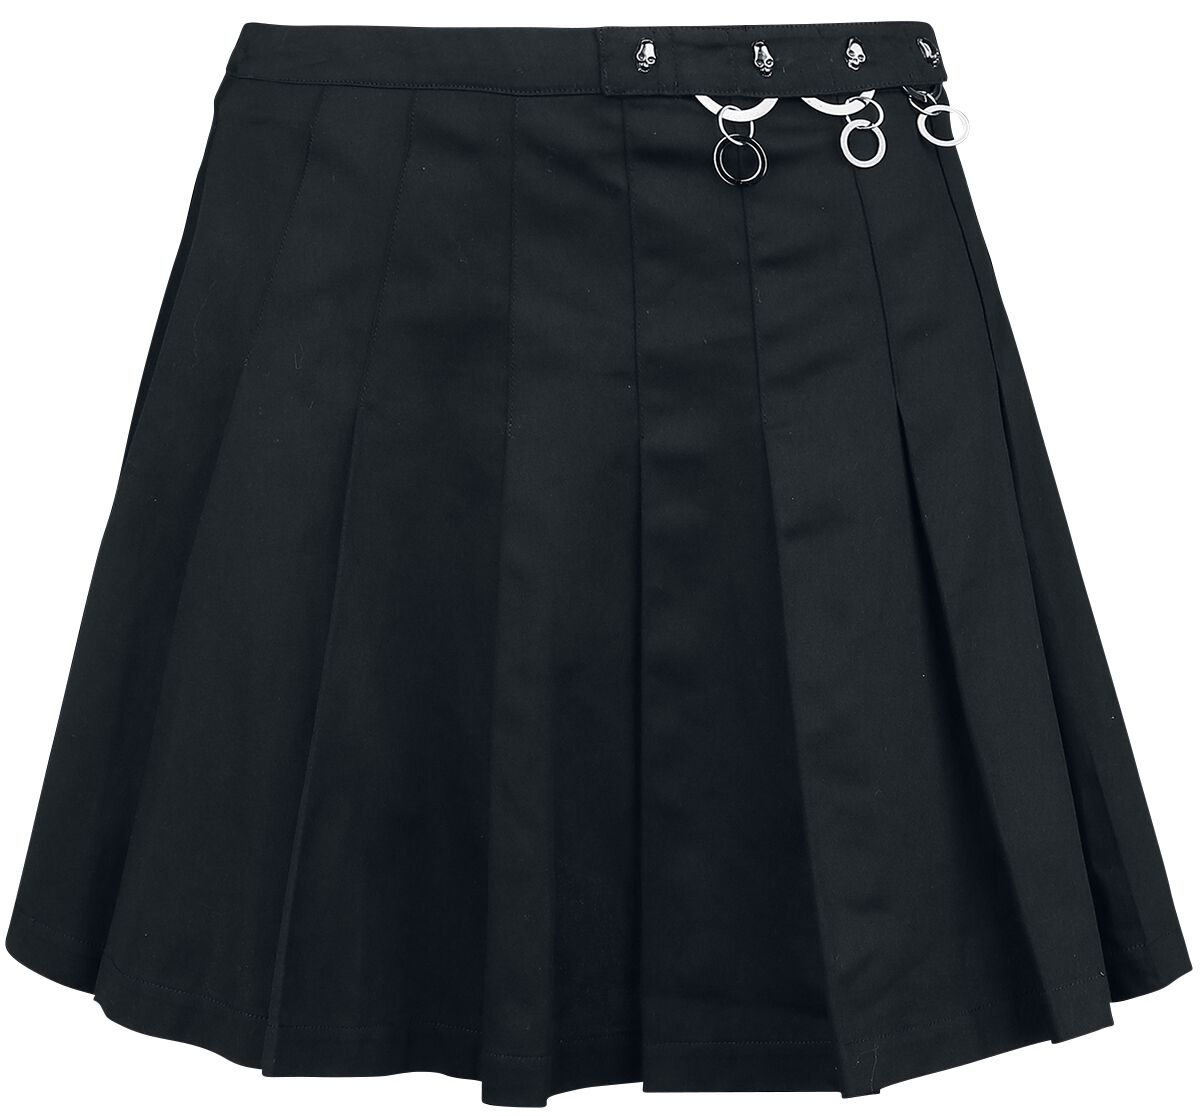 Banned Alternative Pleated Ring Skirt Kurzer Rock schwarz in XL